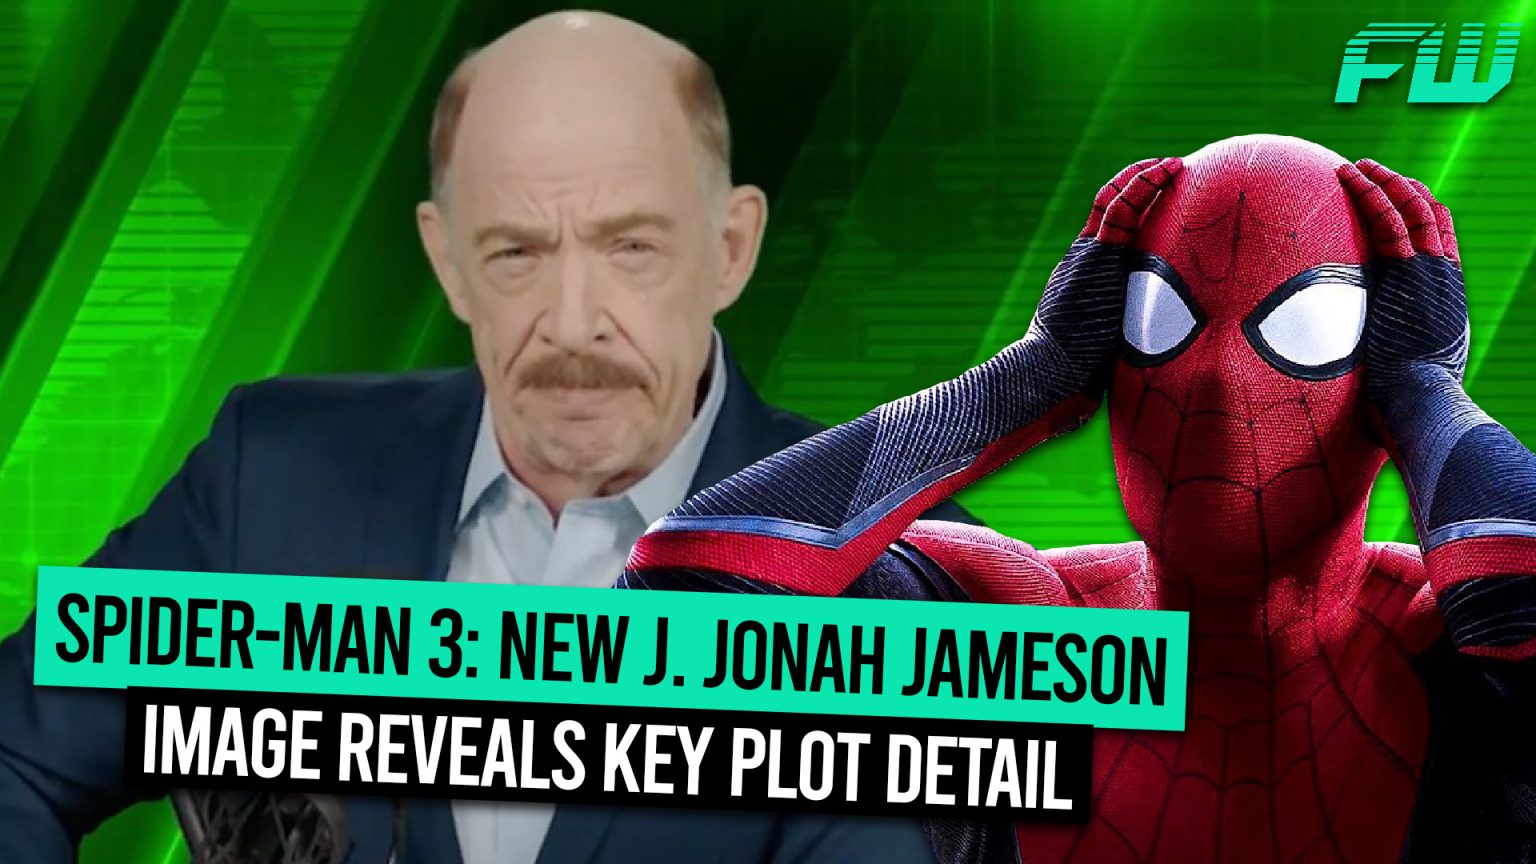 SpiderMan 3 New J. Jonah Jameson Image Reveals Key Plot Detail